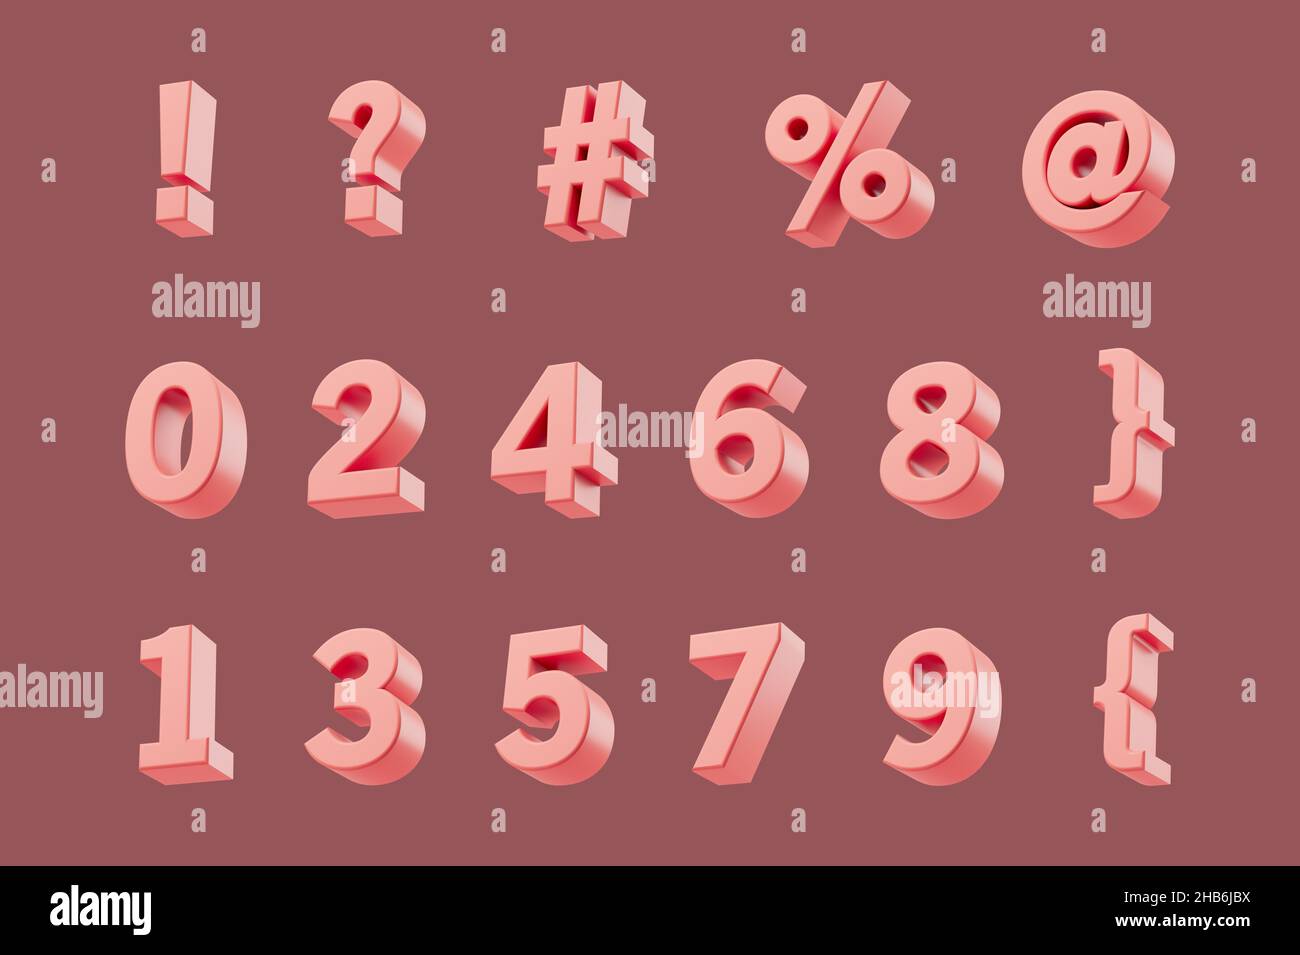 Simple shiny numeric symbols set 3d render illustration. Isolated objects on pastel background Stock Photo